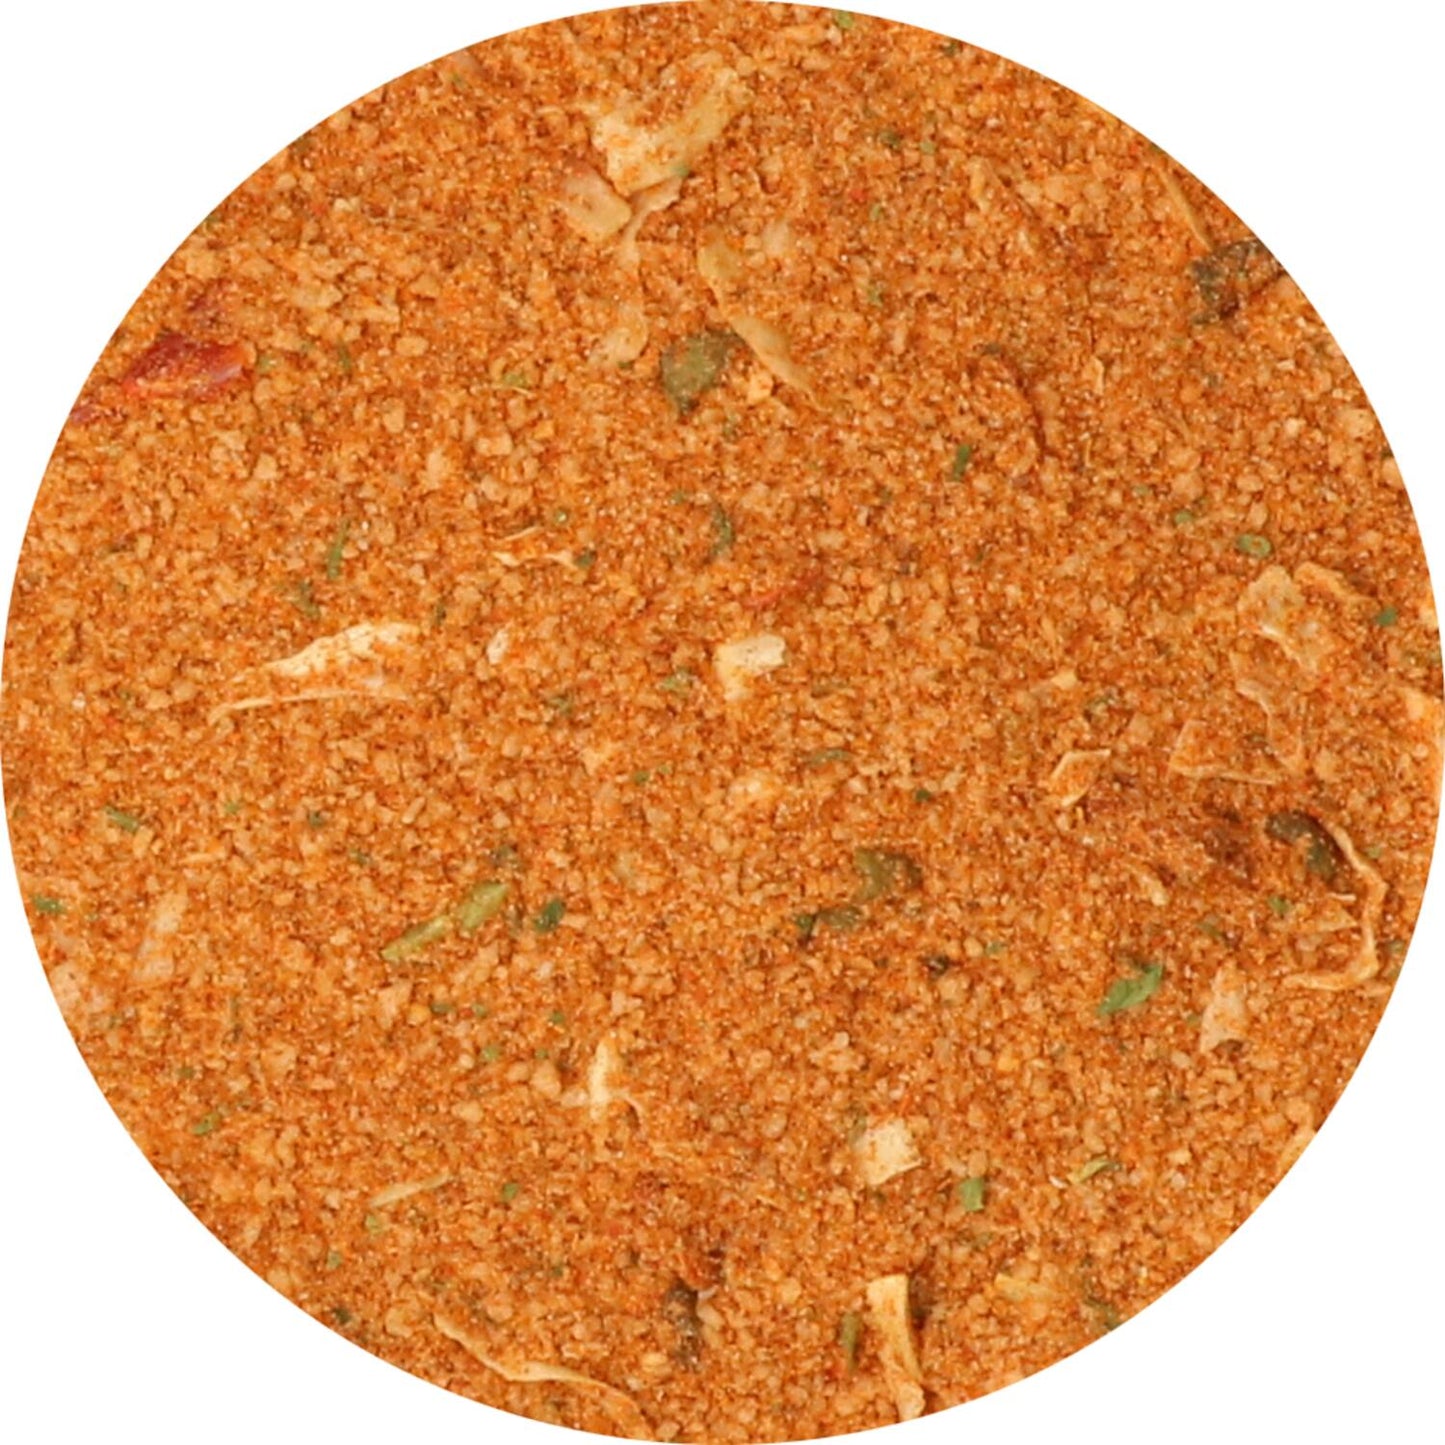 Couscous kruiden - Zoutloze kruidenmix grof gemalen